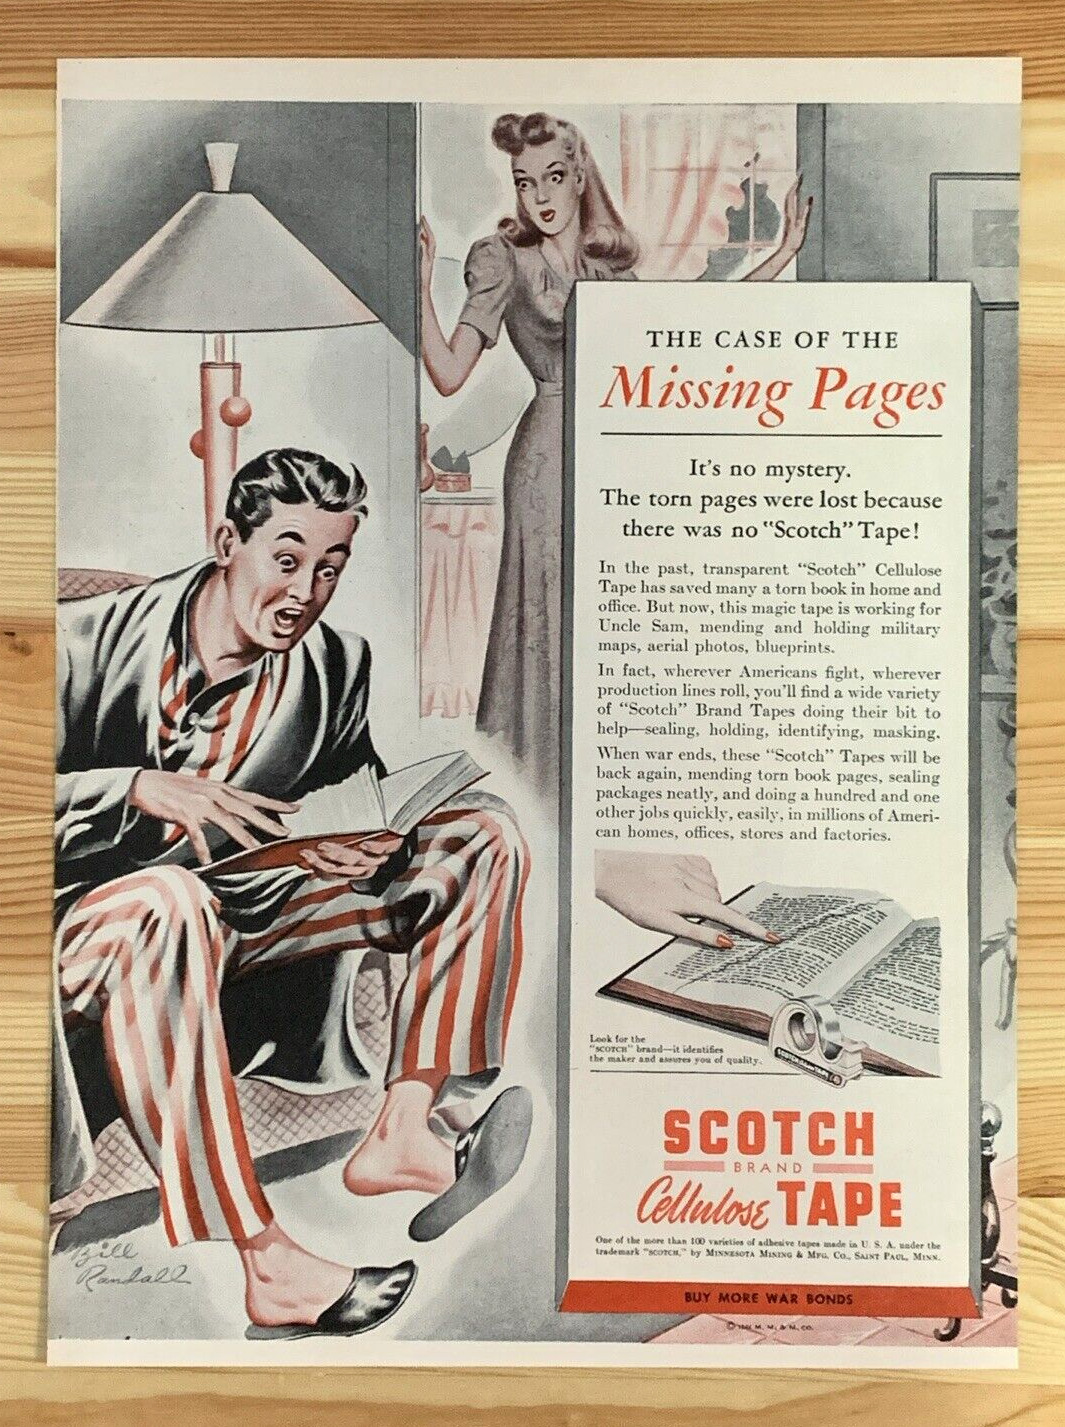 Print Ad Scotch Brand Cellulose Tape 1944 #0131